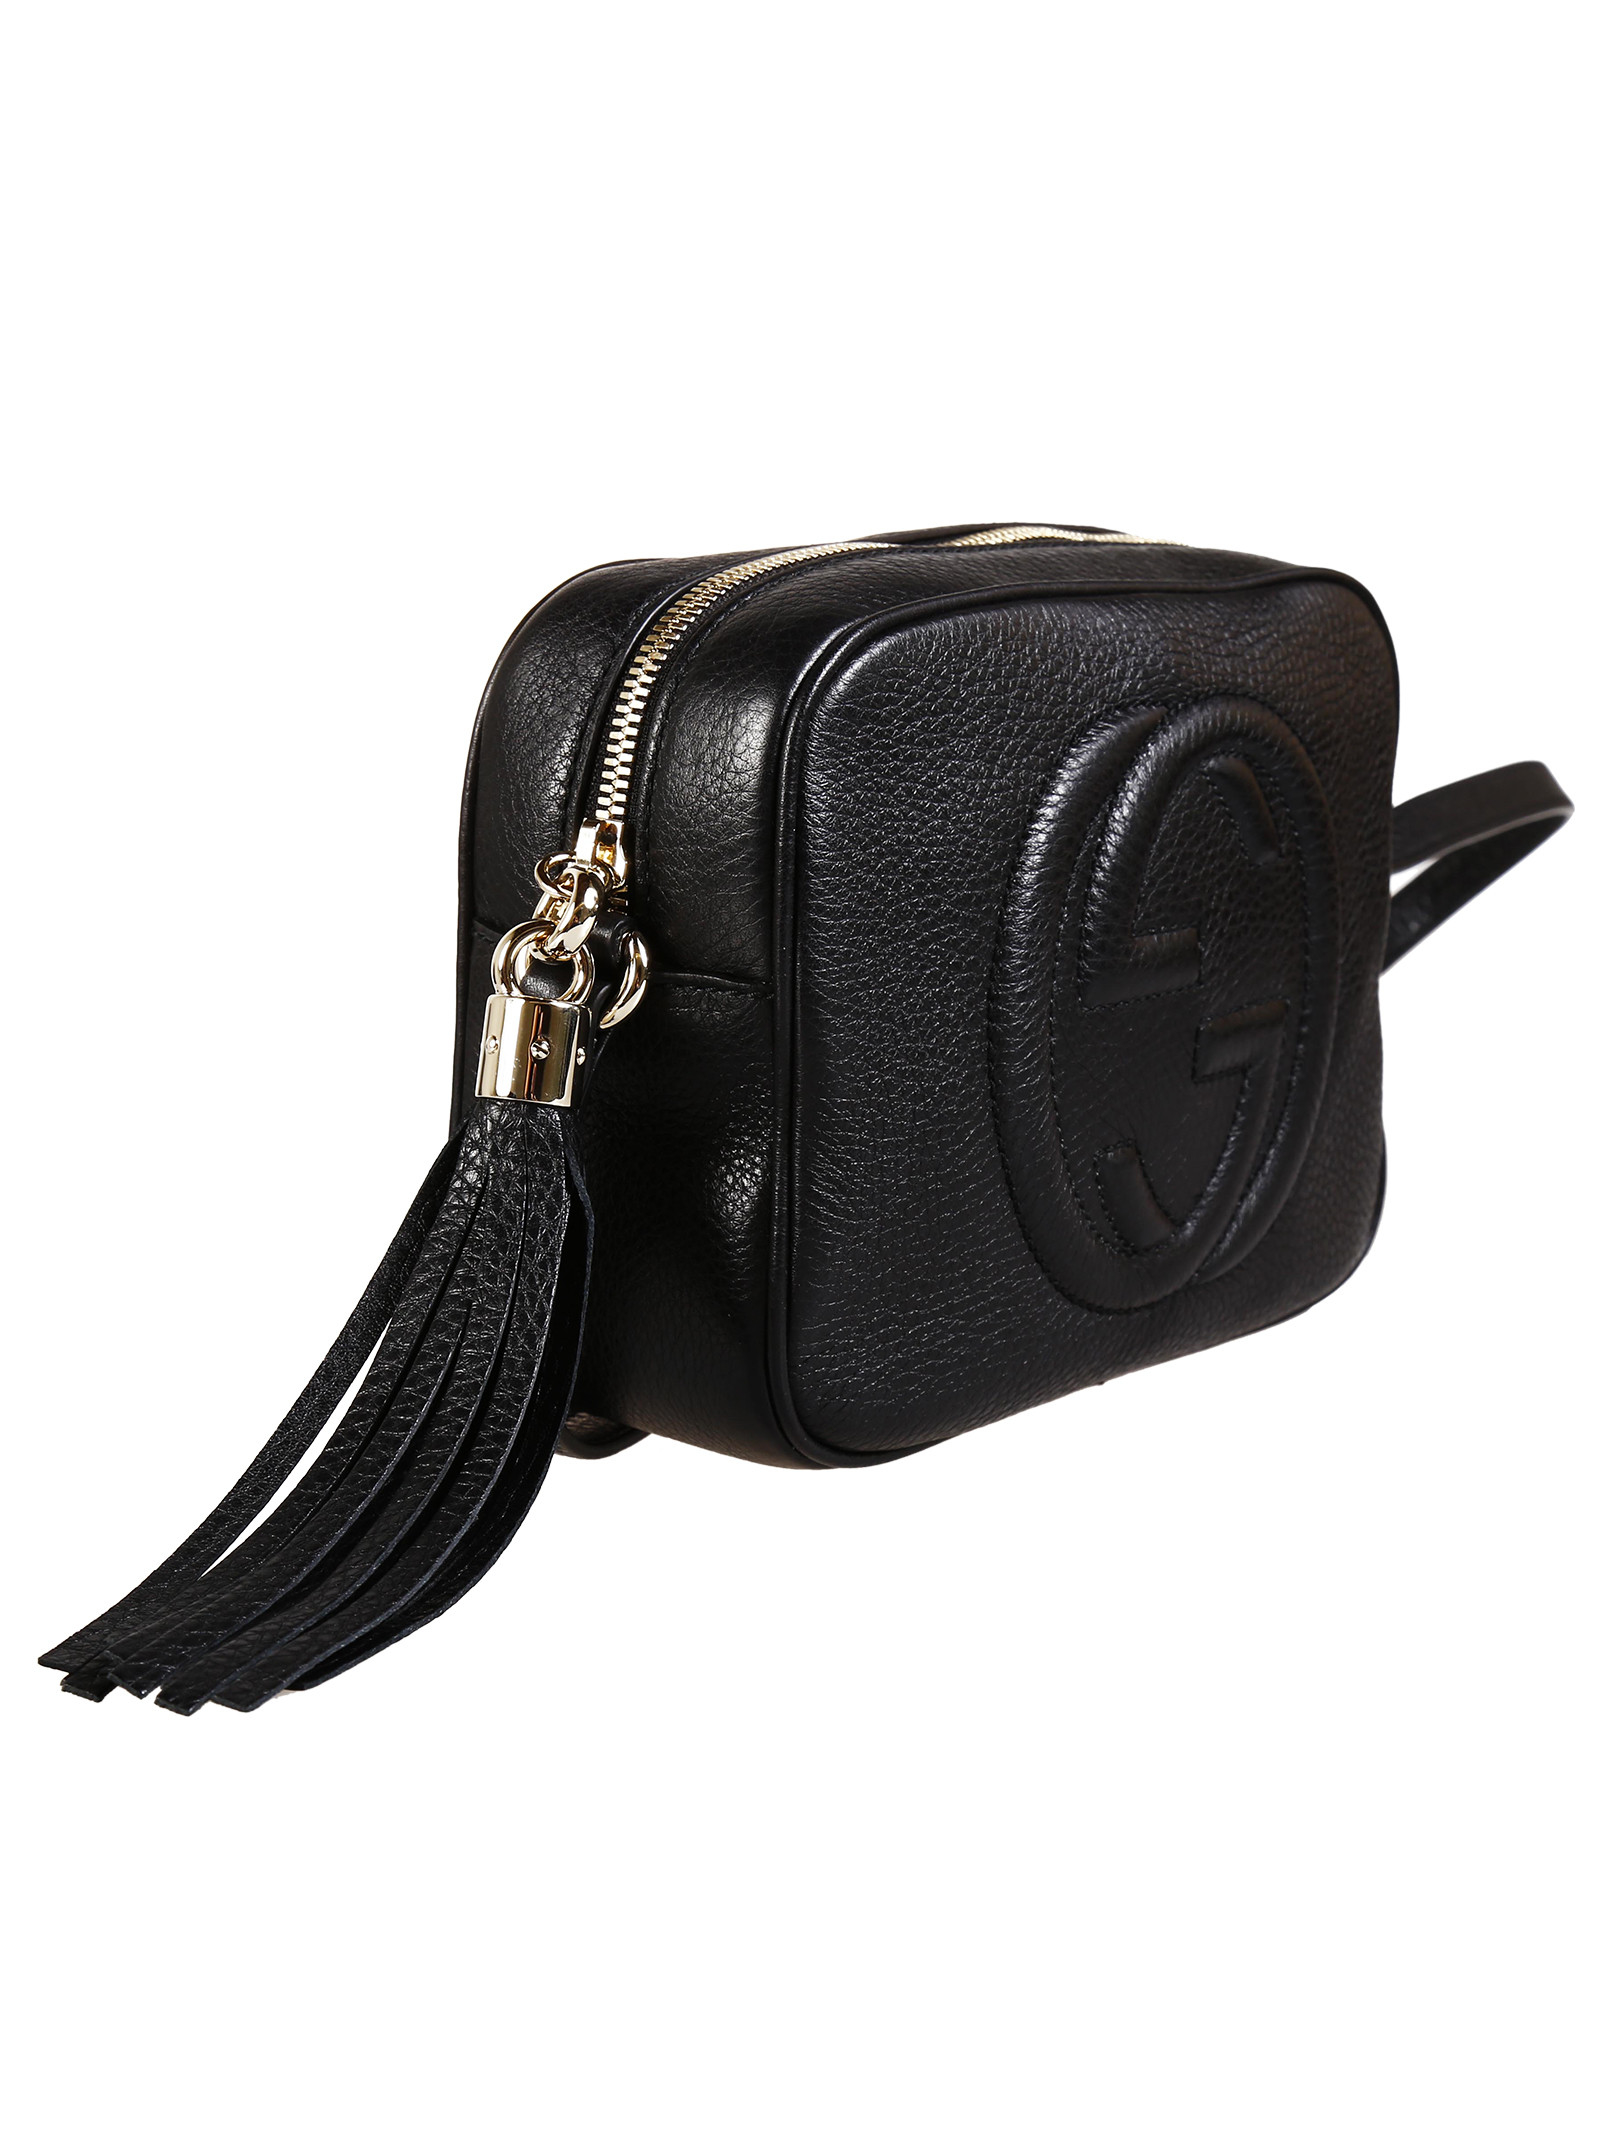 Gucci Cellarius Leather Soho Small Disco Bag in Black | Lyst